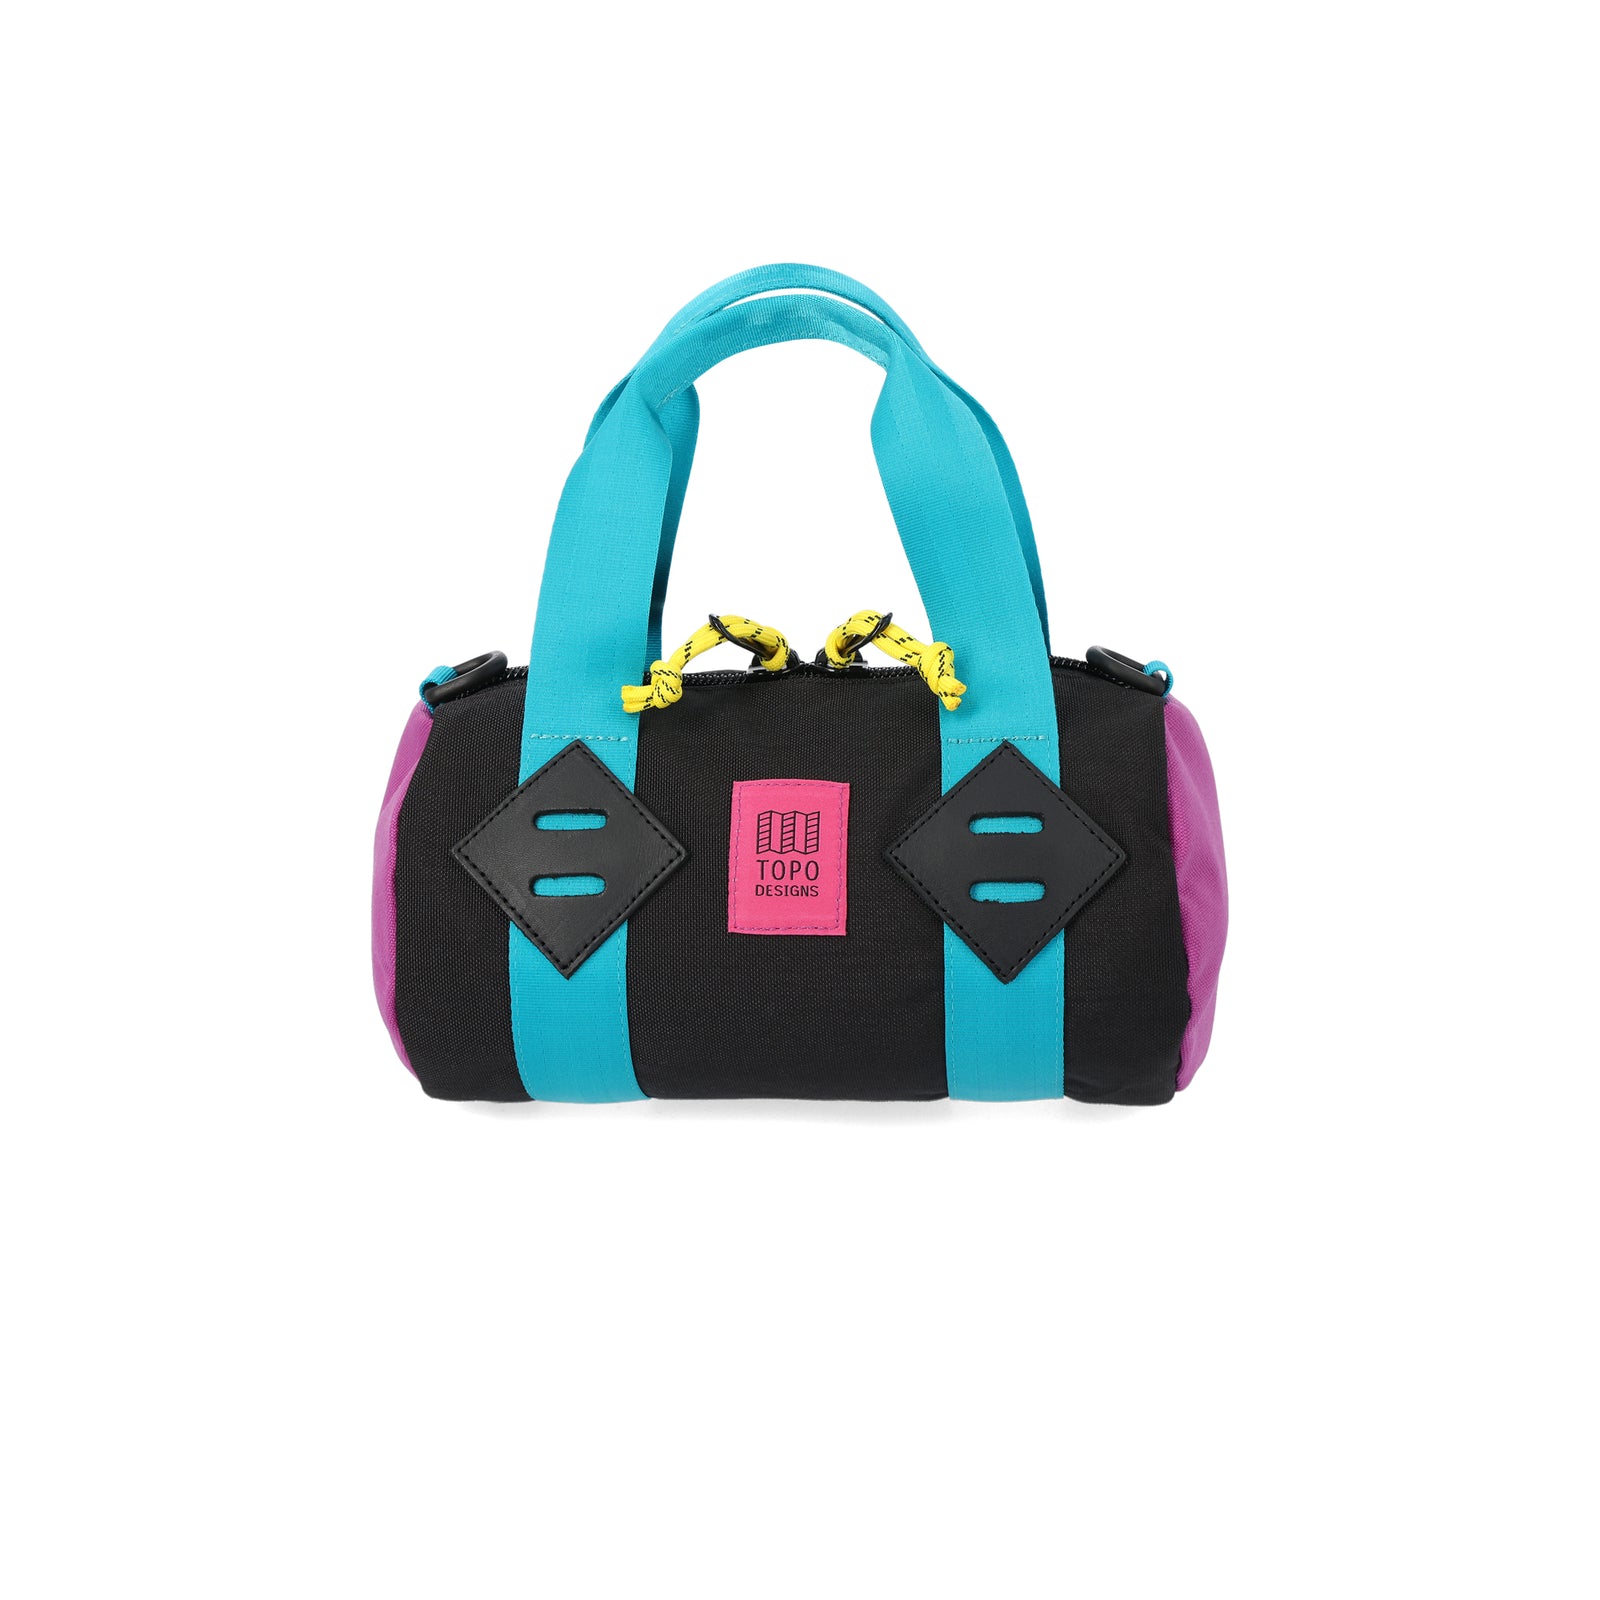 Topo Designs Mini Classic Duffel Bag shoulder crossbody purse in recycled "Black / Grape" purple nylon.